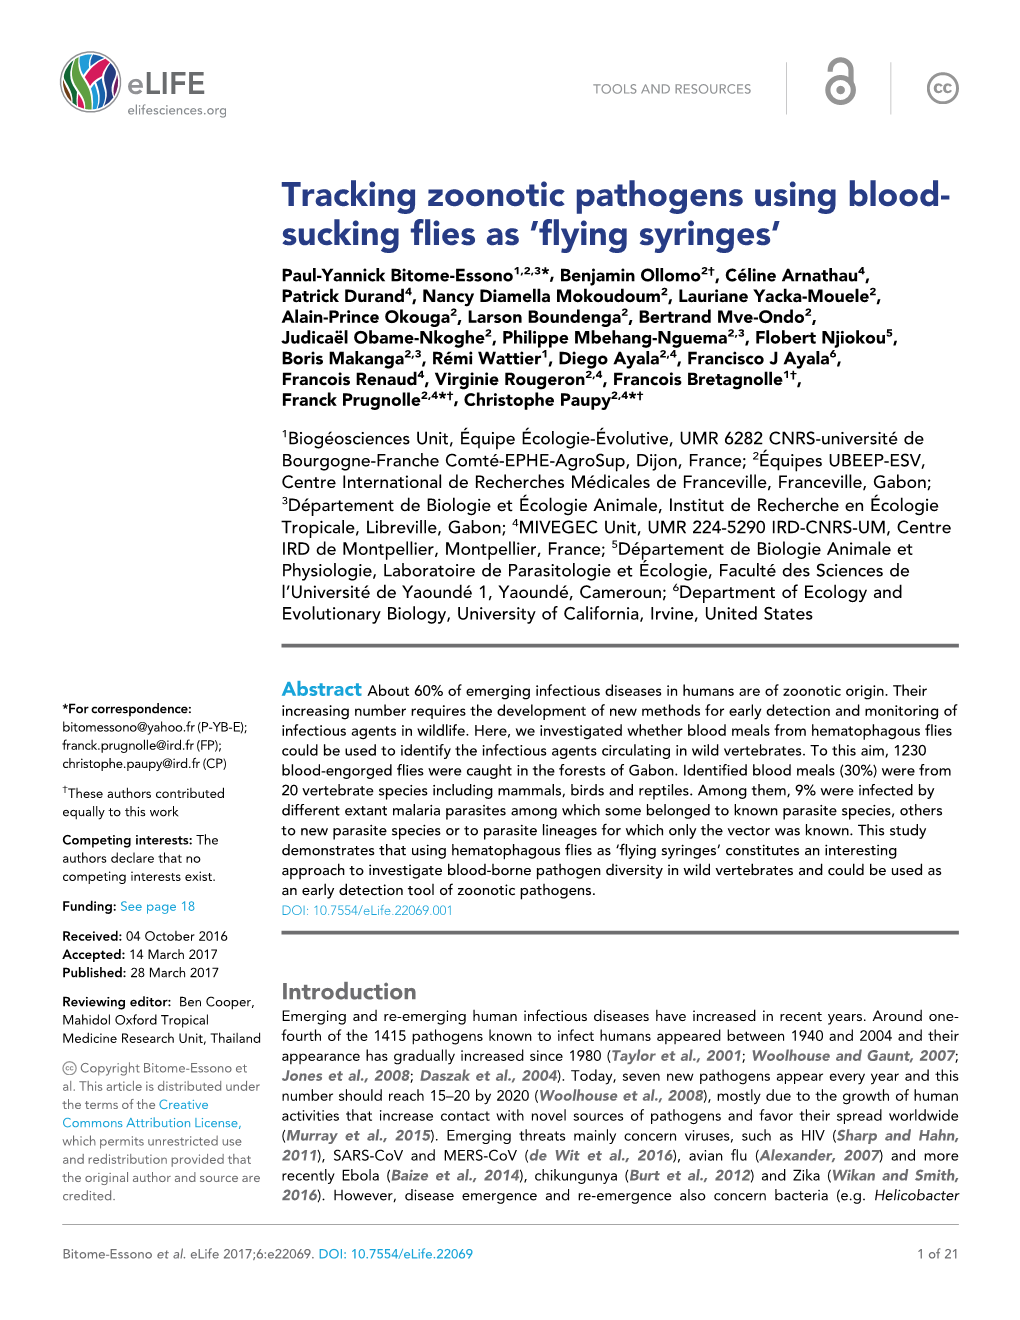 Tracking Zoonotic Pathogens Using Bloodsucking Flies As 'Flying Syringes'